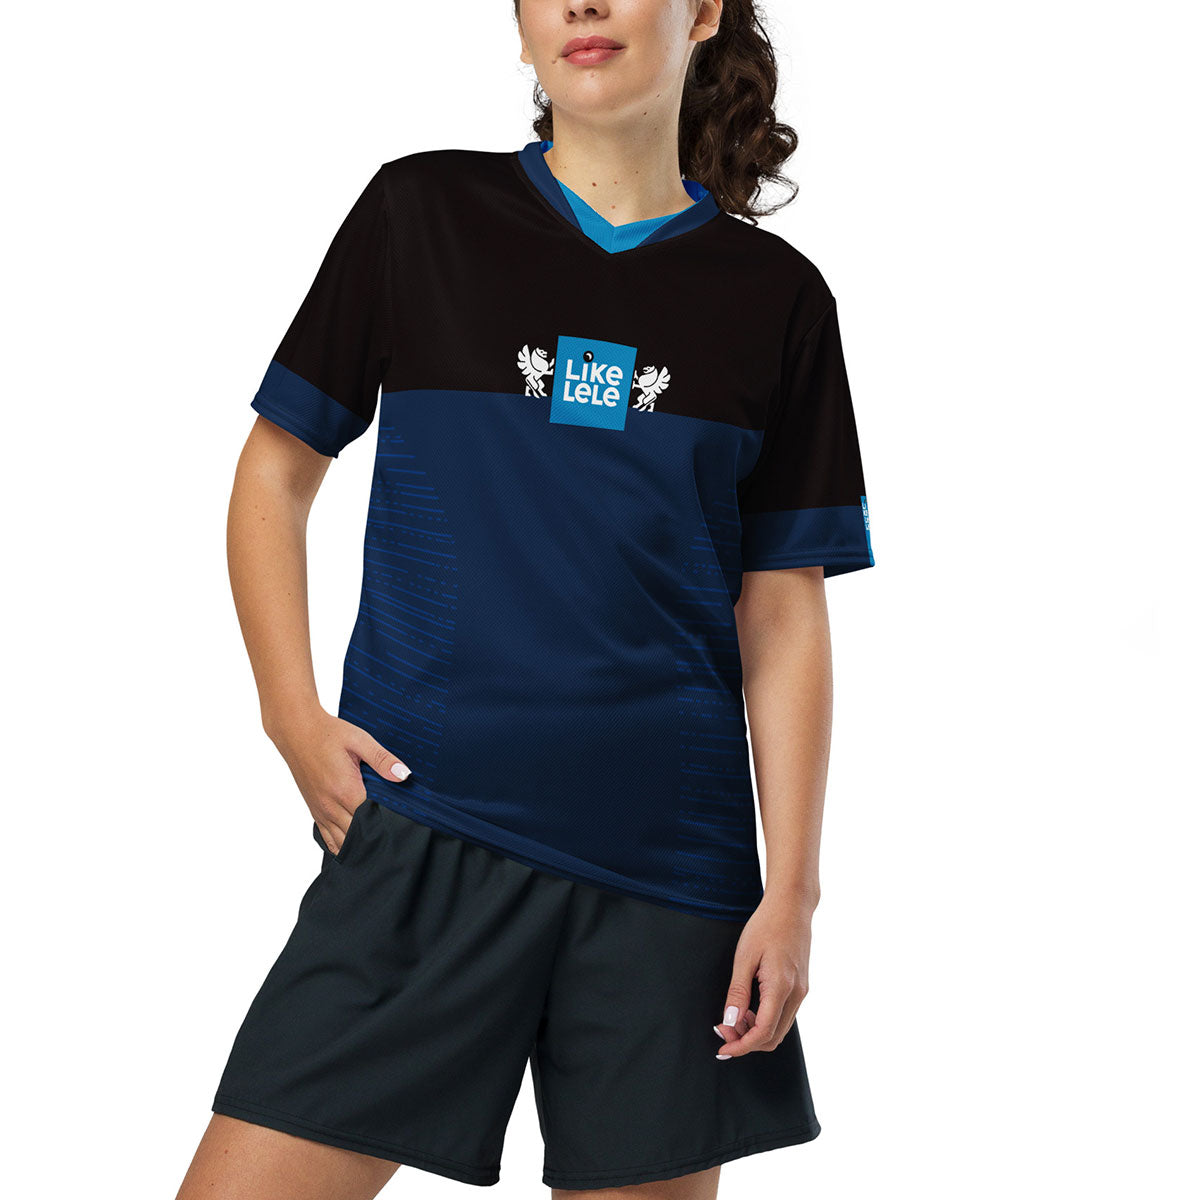 LIKELELE world · Camiseta deportiva m/corta·Unisex · Premium·Full Print-279x4ipi